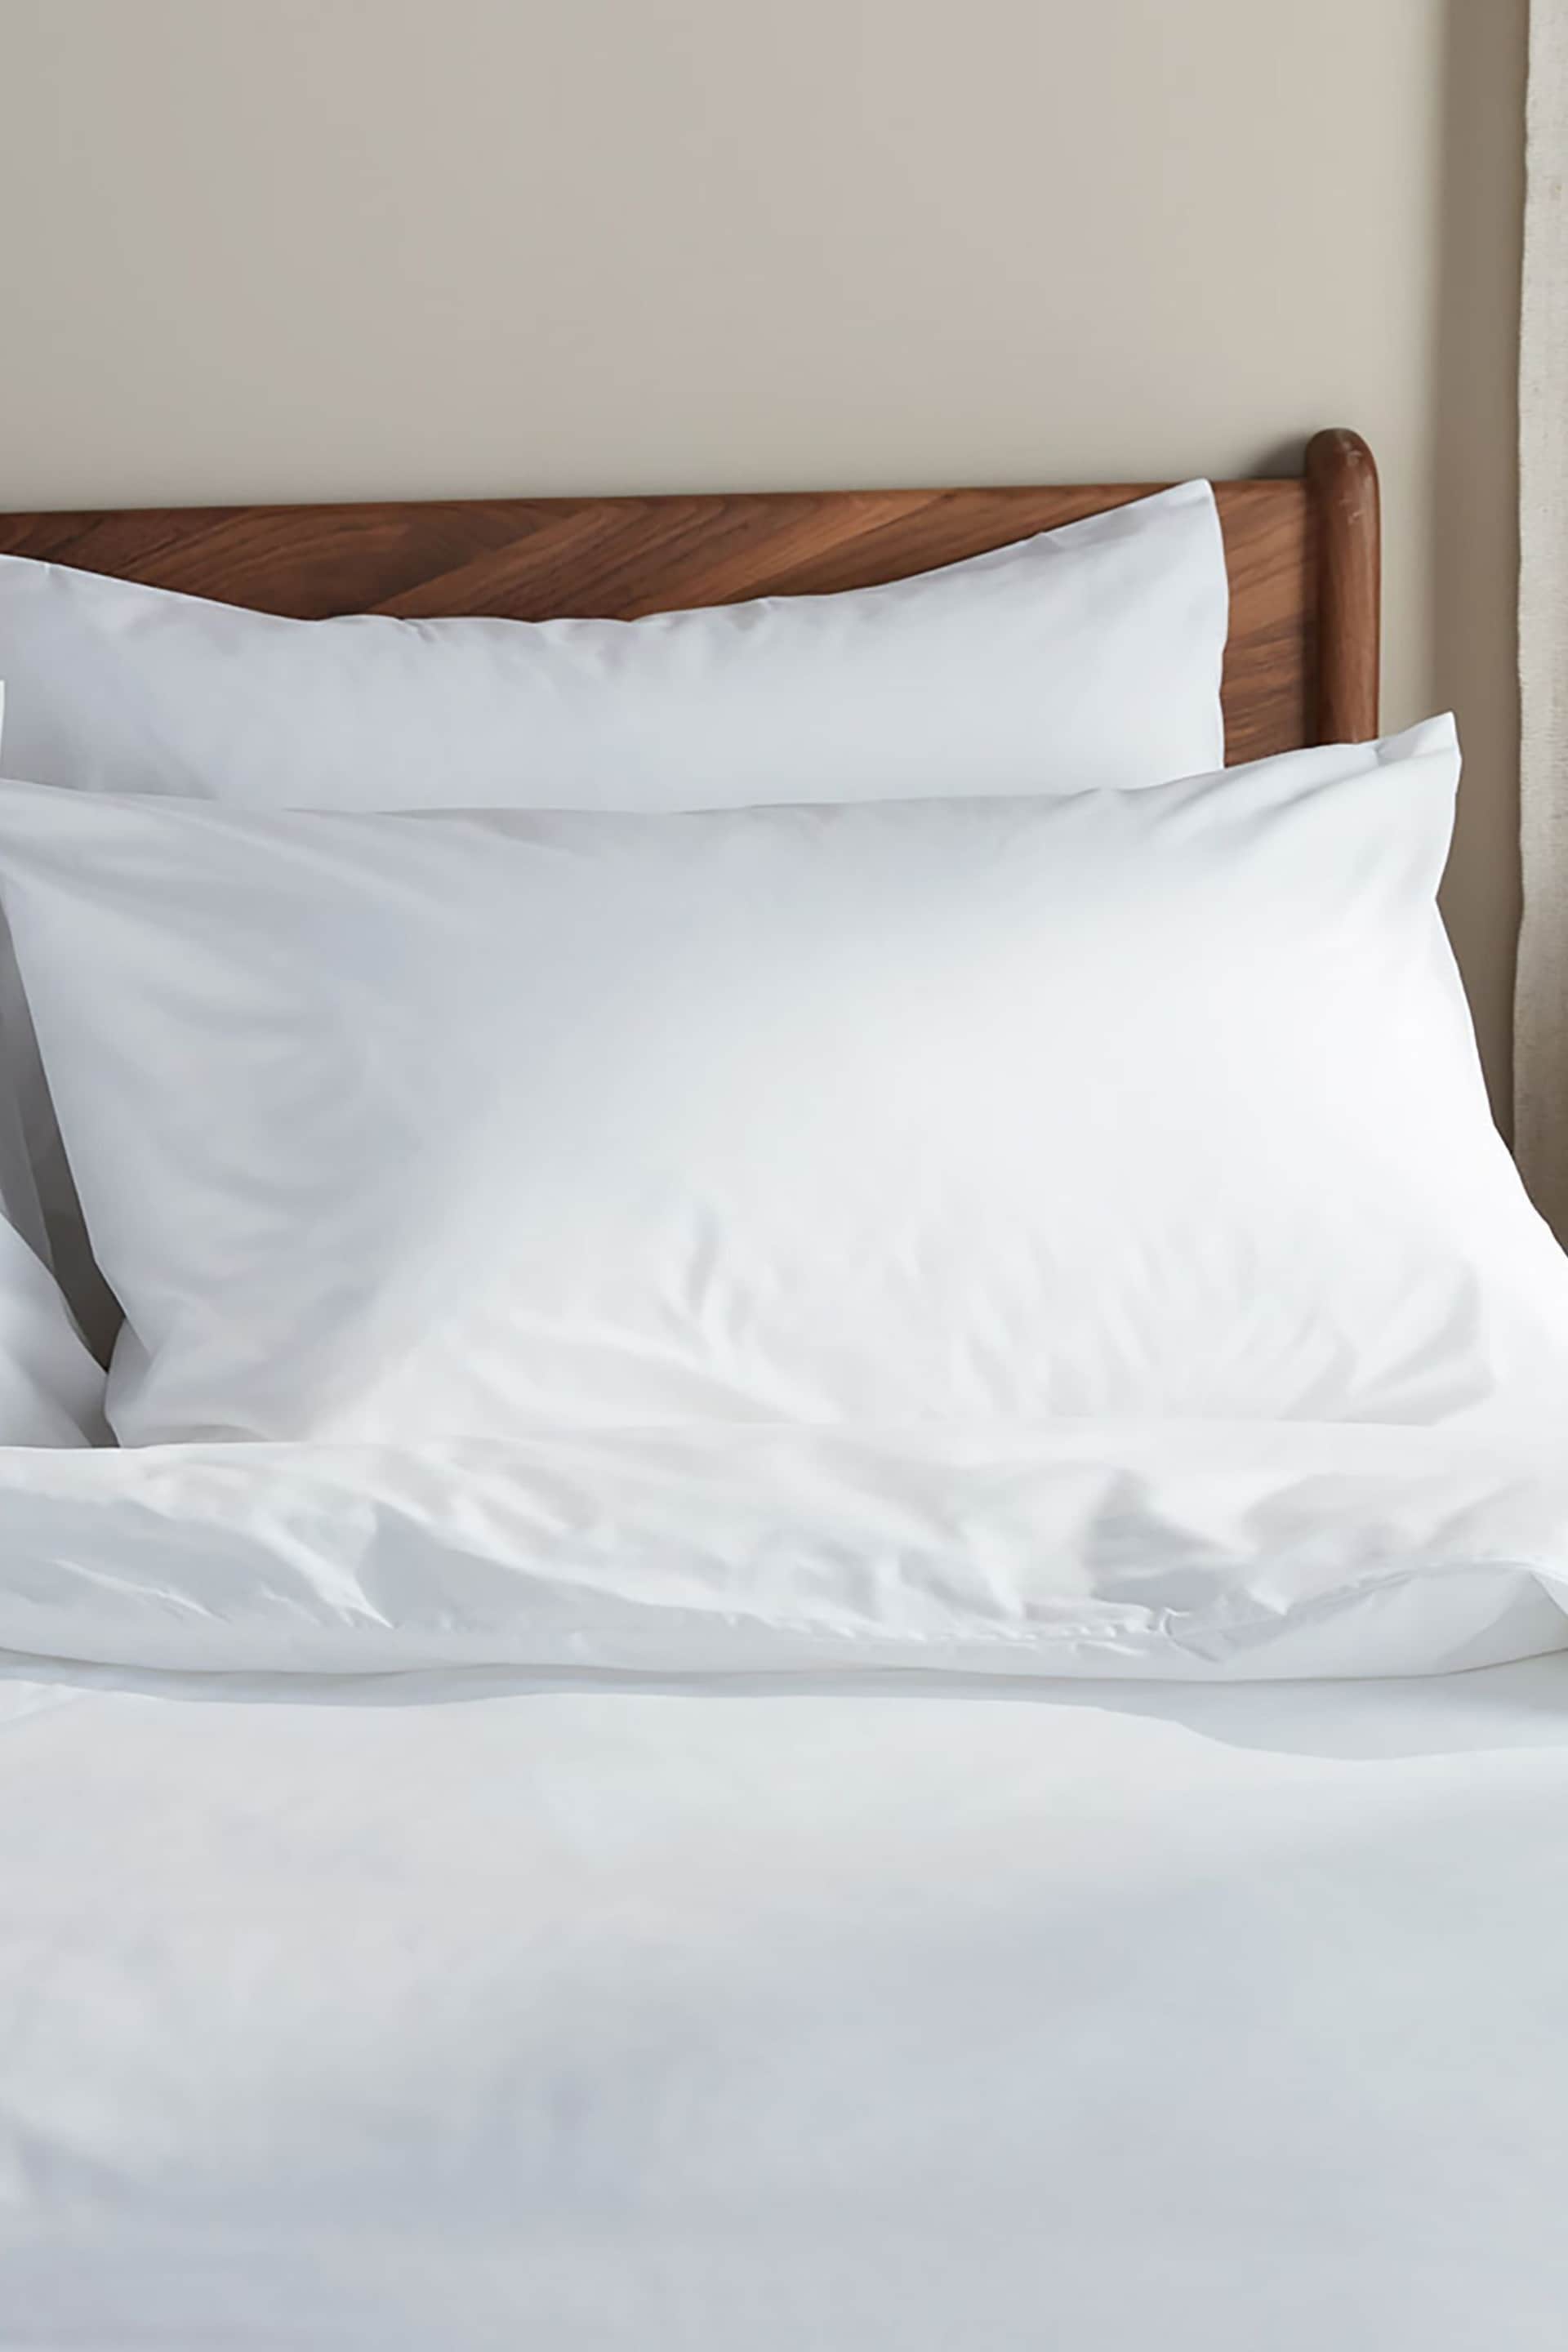 Bedfolk Set of 2 White Luxe Cotton King Pillowcases - Image 1 of 5